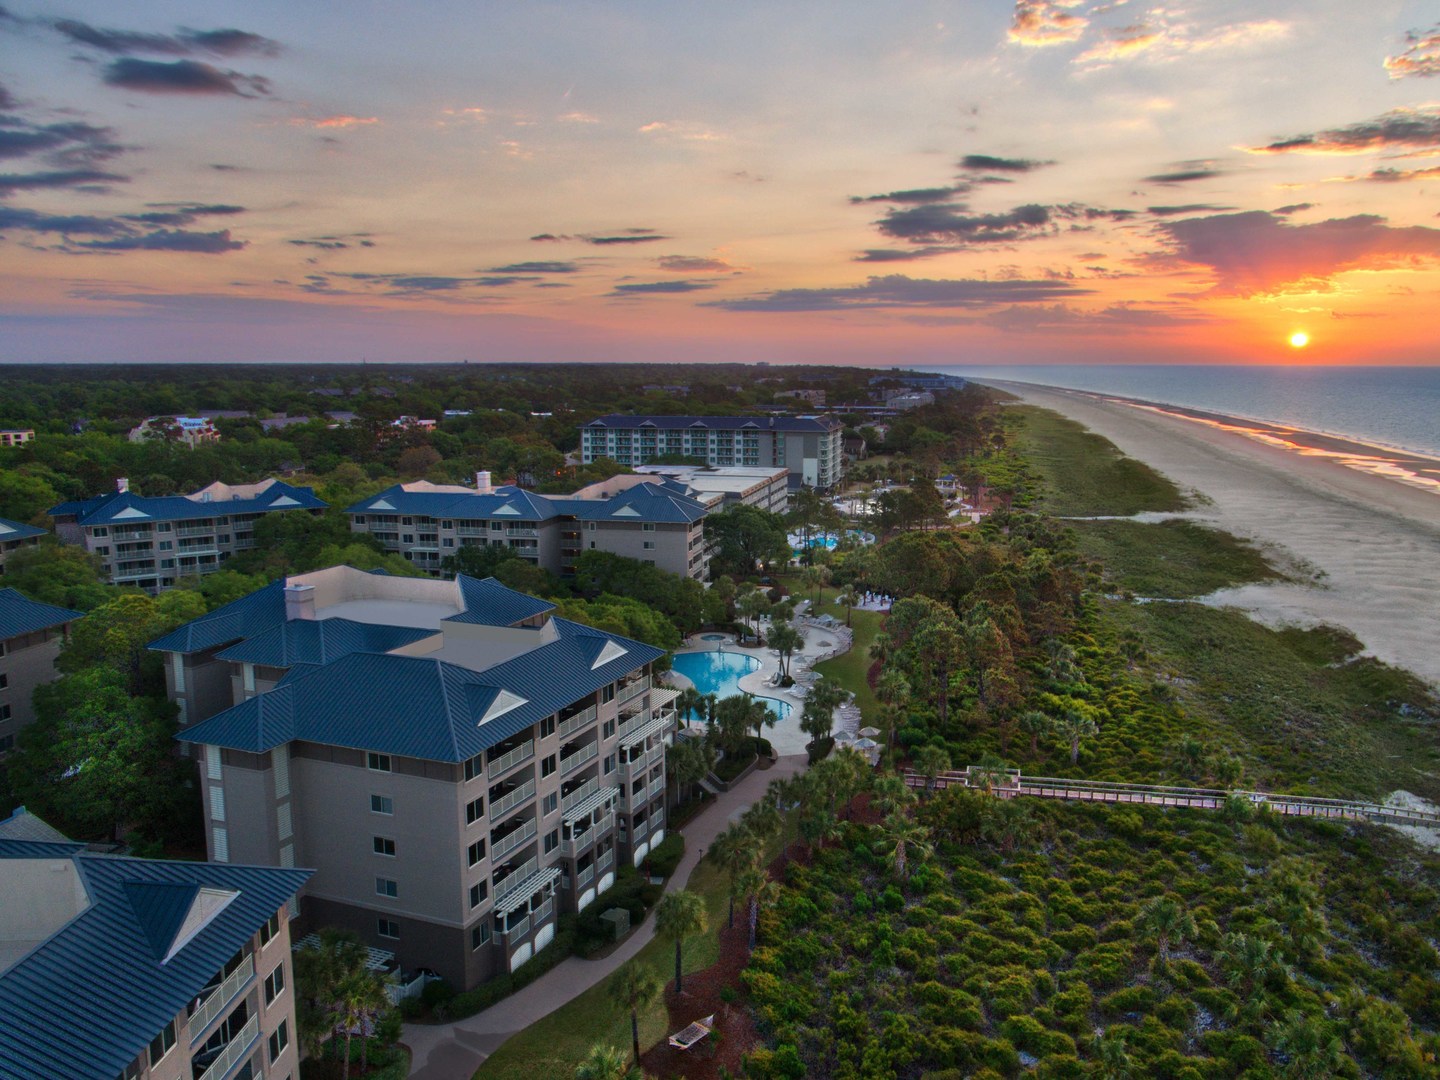 Marriott's Grande Ocean Aerial Resort View. Marriott's Grande Ocean is located in Hilton Head Island, South Carolina United States.